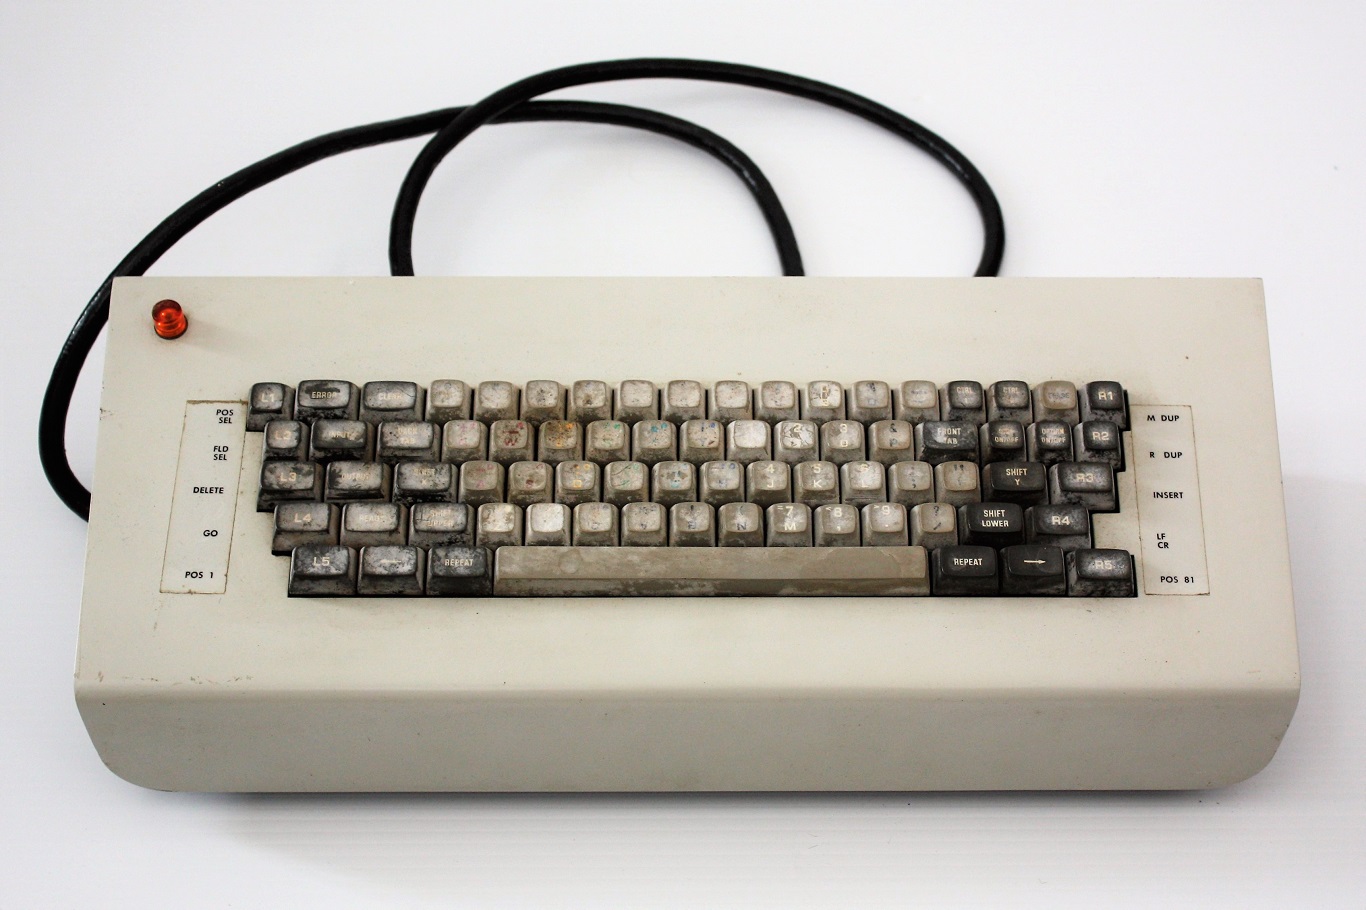 Viatron System 21 - keyboard as received